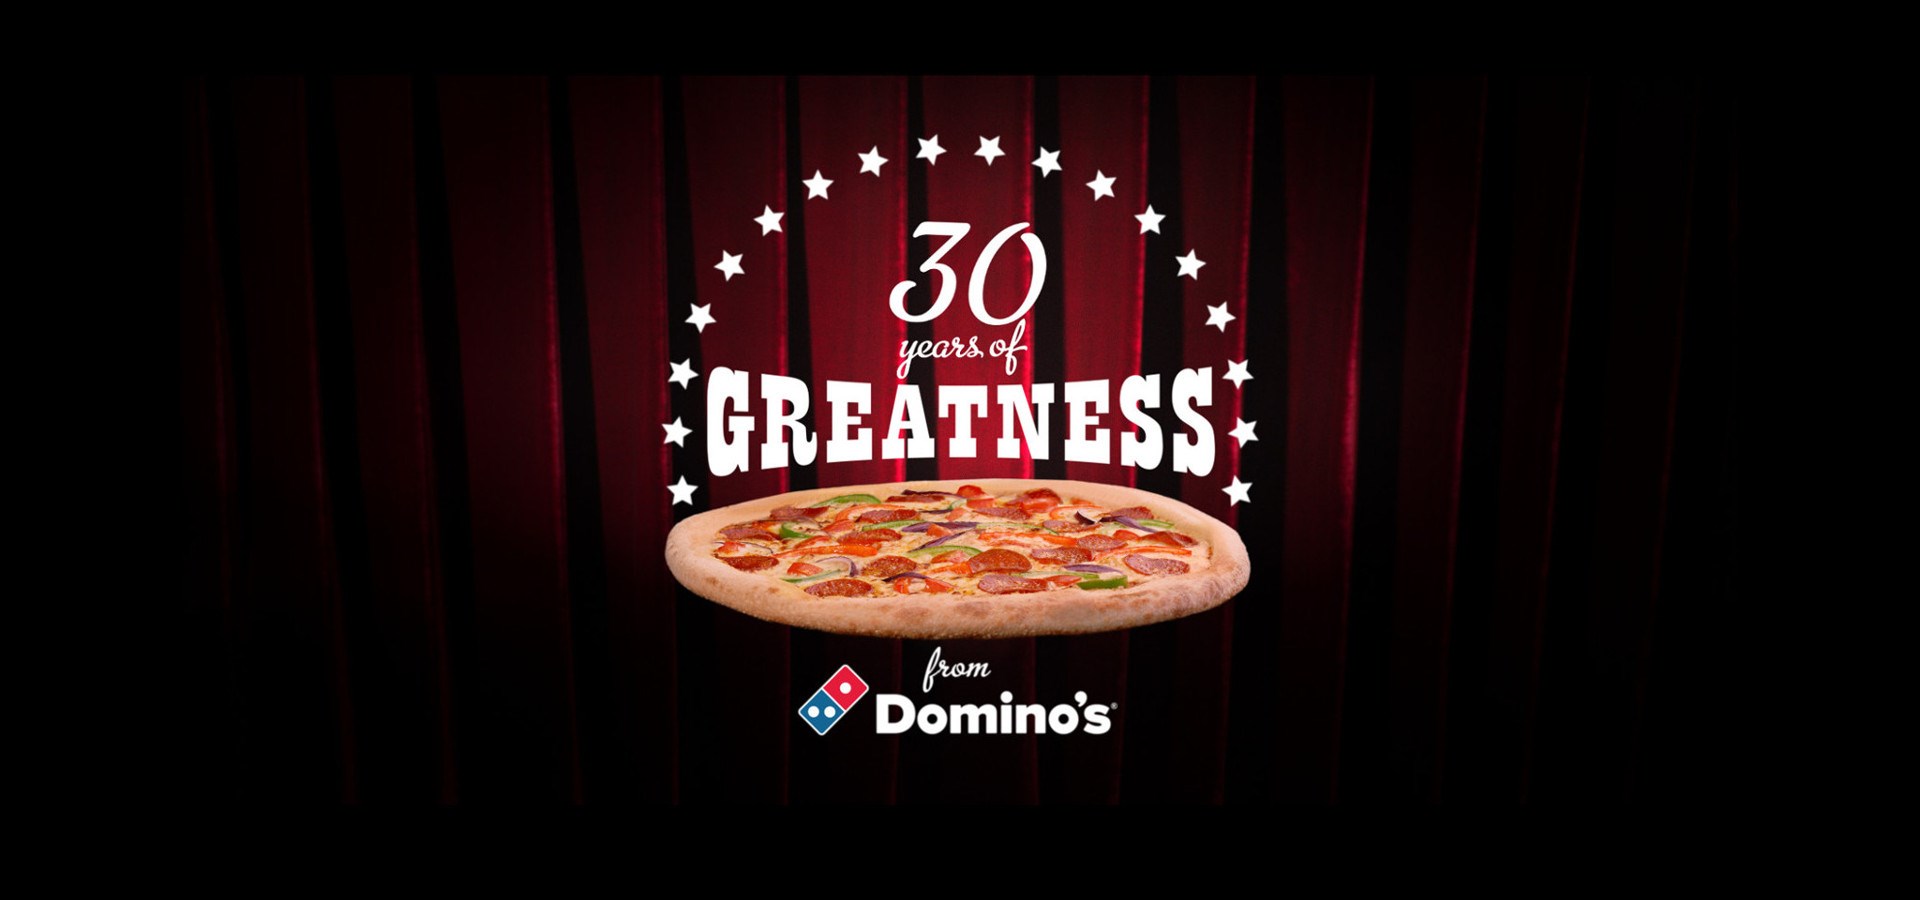 Domino's Greatness